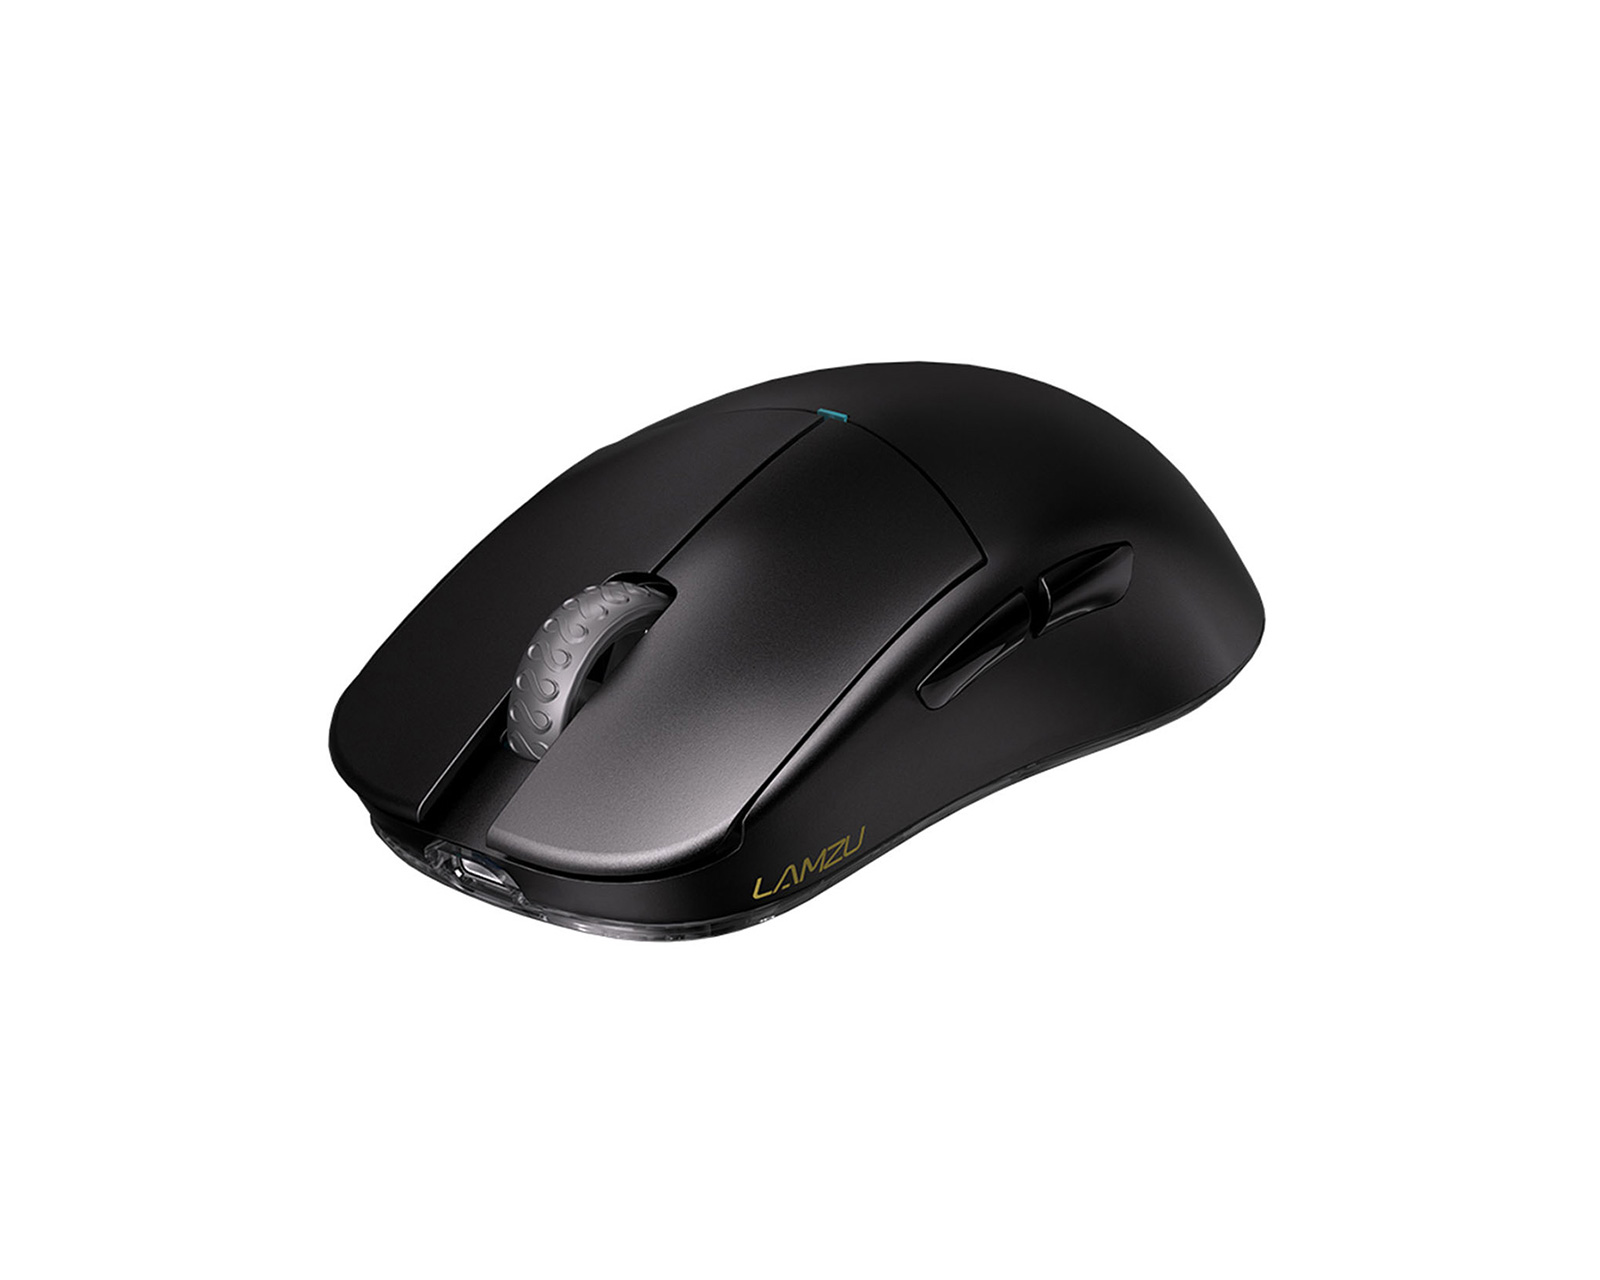 Lamzu Atlantis Mini 4K Wireless Superlight Gaming Mouse - Charcoal Black  (DEMO)